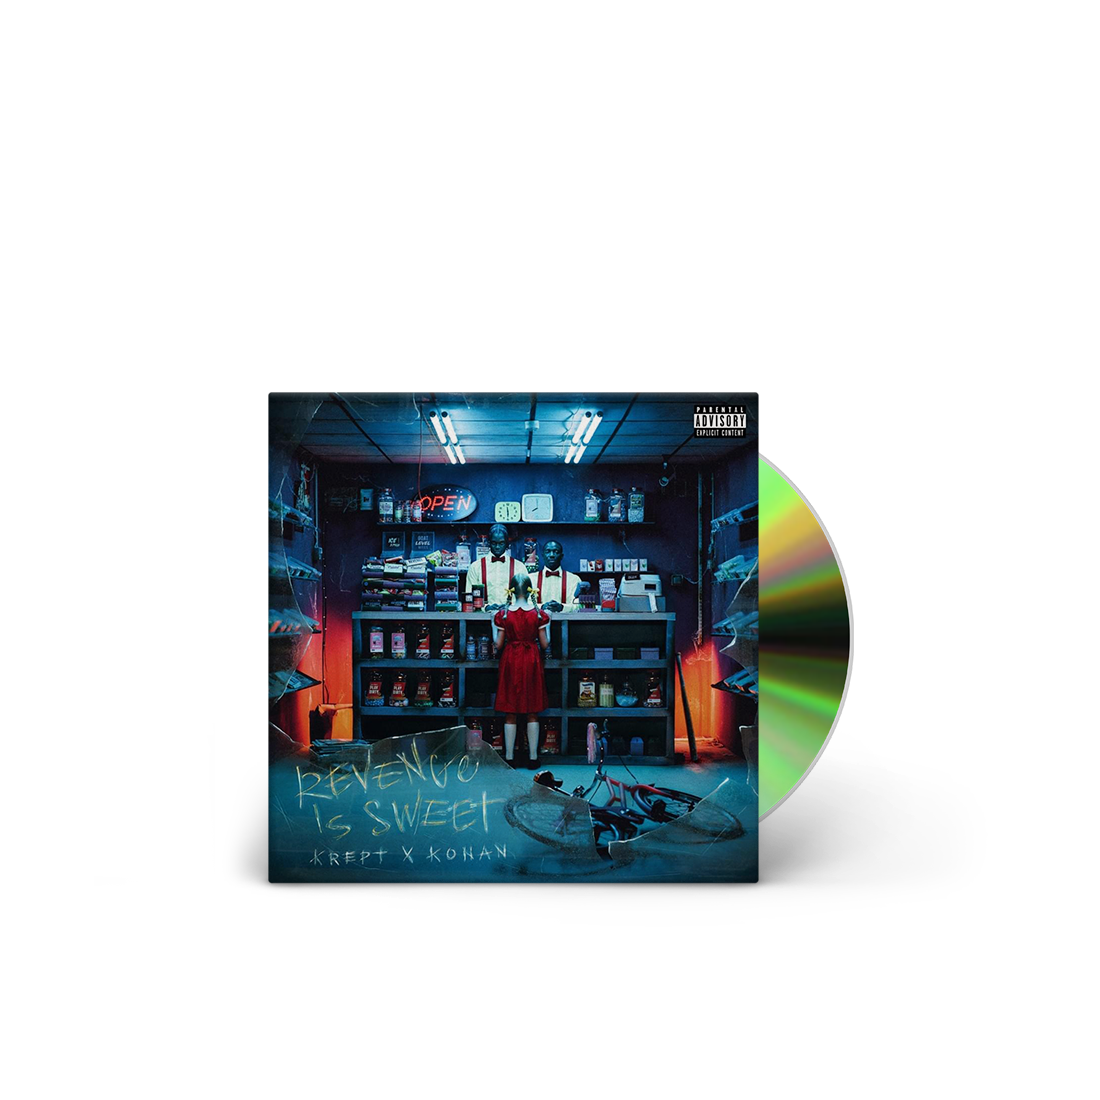 Krept & Konan - Revenge Is Sweet: CD